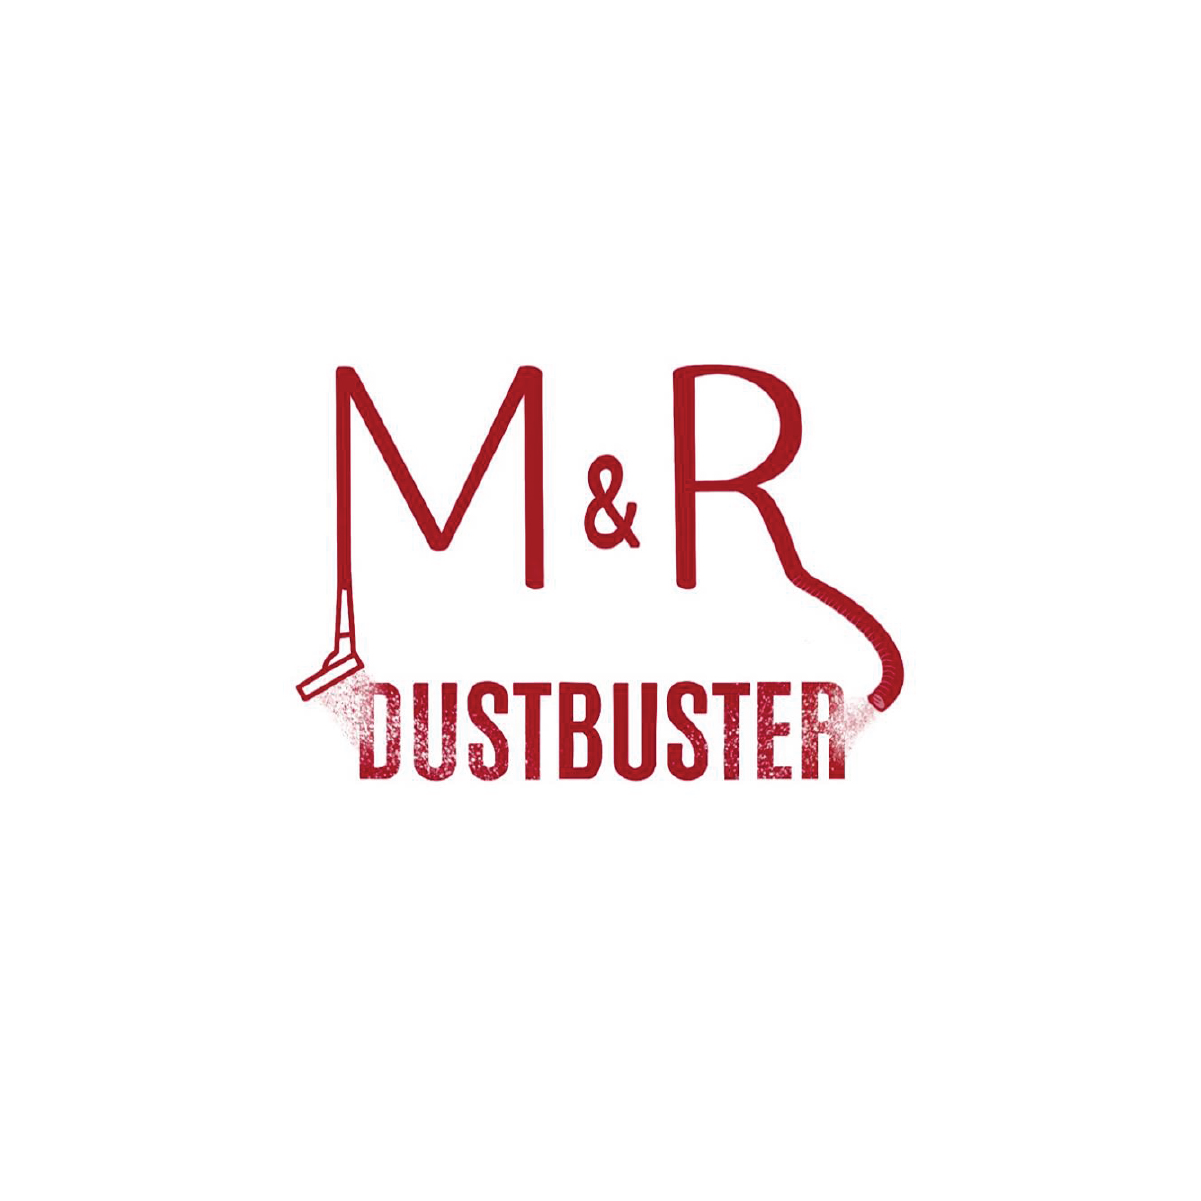 M&R Dustbuster logo